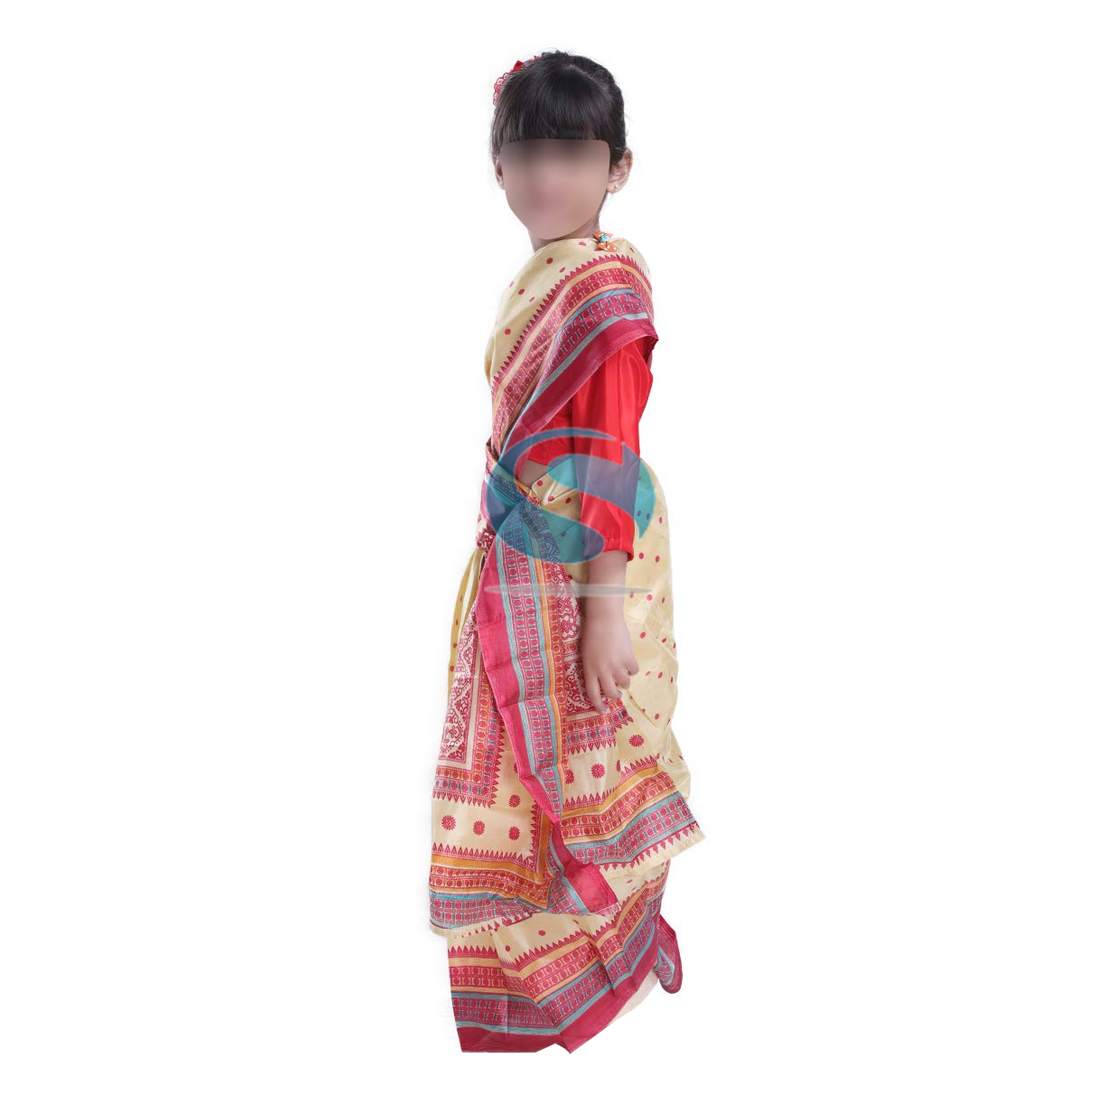 Assami Bihu Boy Fancy Dress for Boys - BarbieTales.com